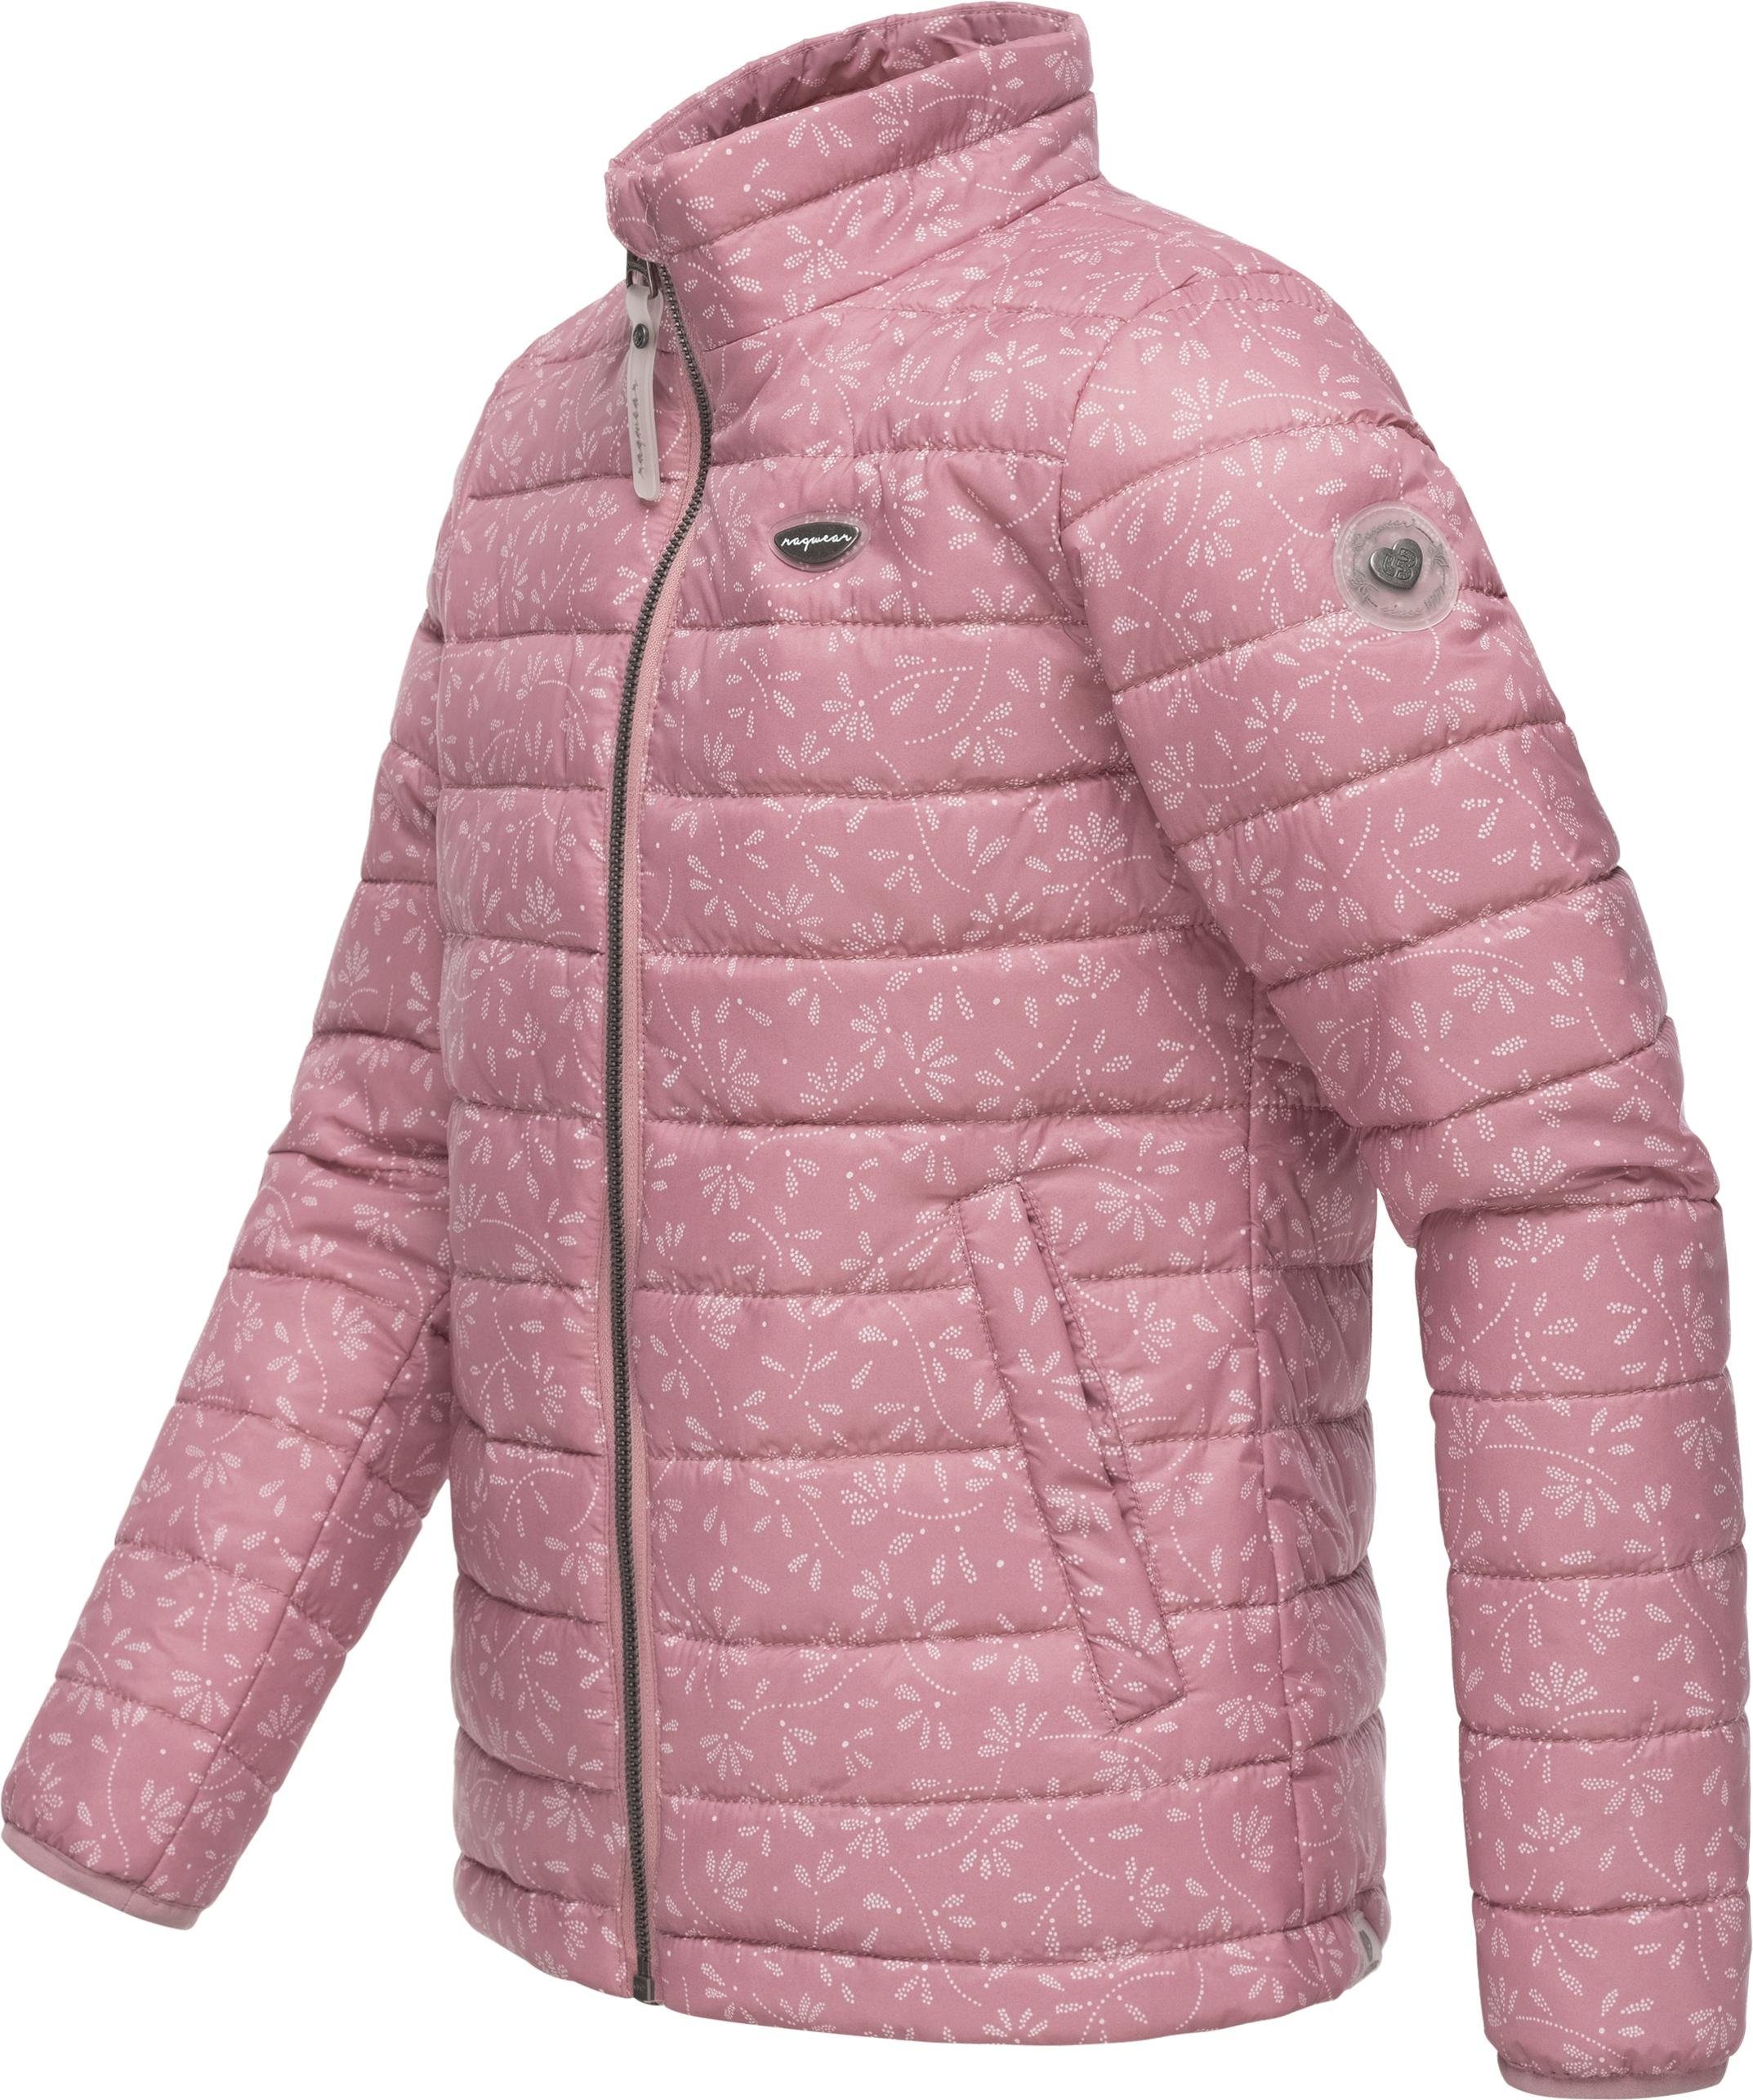 Ragwear Steppjacke Yarca mit Mädchen rosa Bloom Blumen-Print Jacke coolem Gesteppte